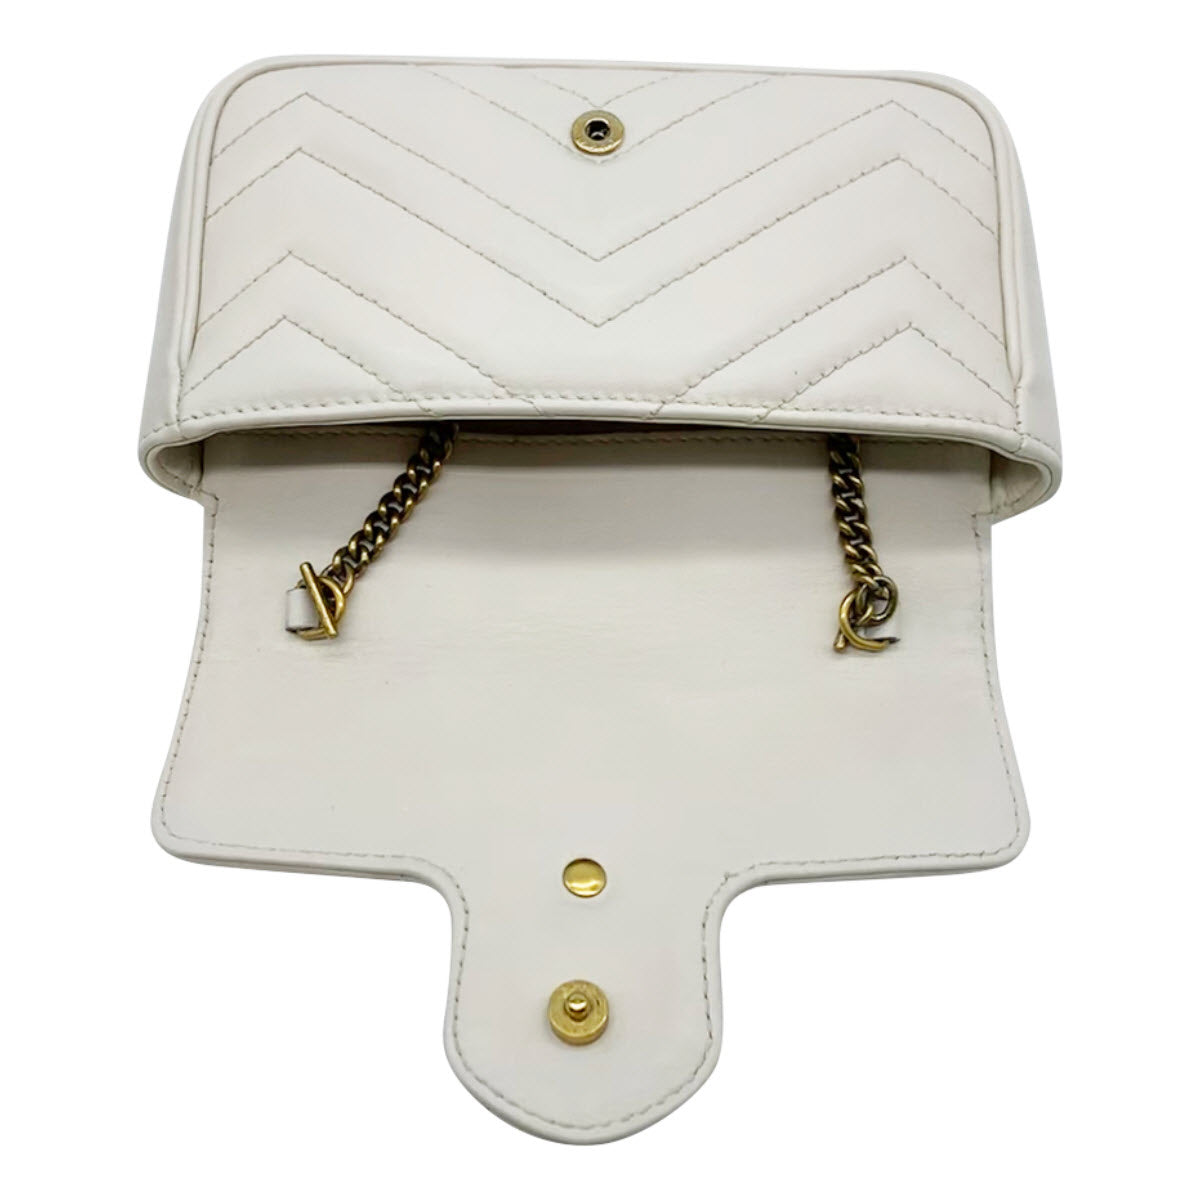 Gucci Marmont Gg Super Mini White Leather Shoulder Bag - MyDesignerly